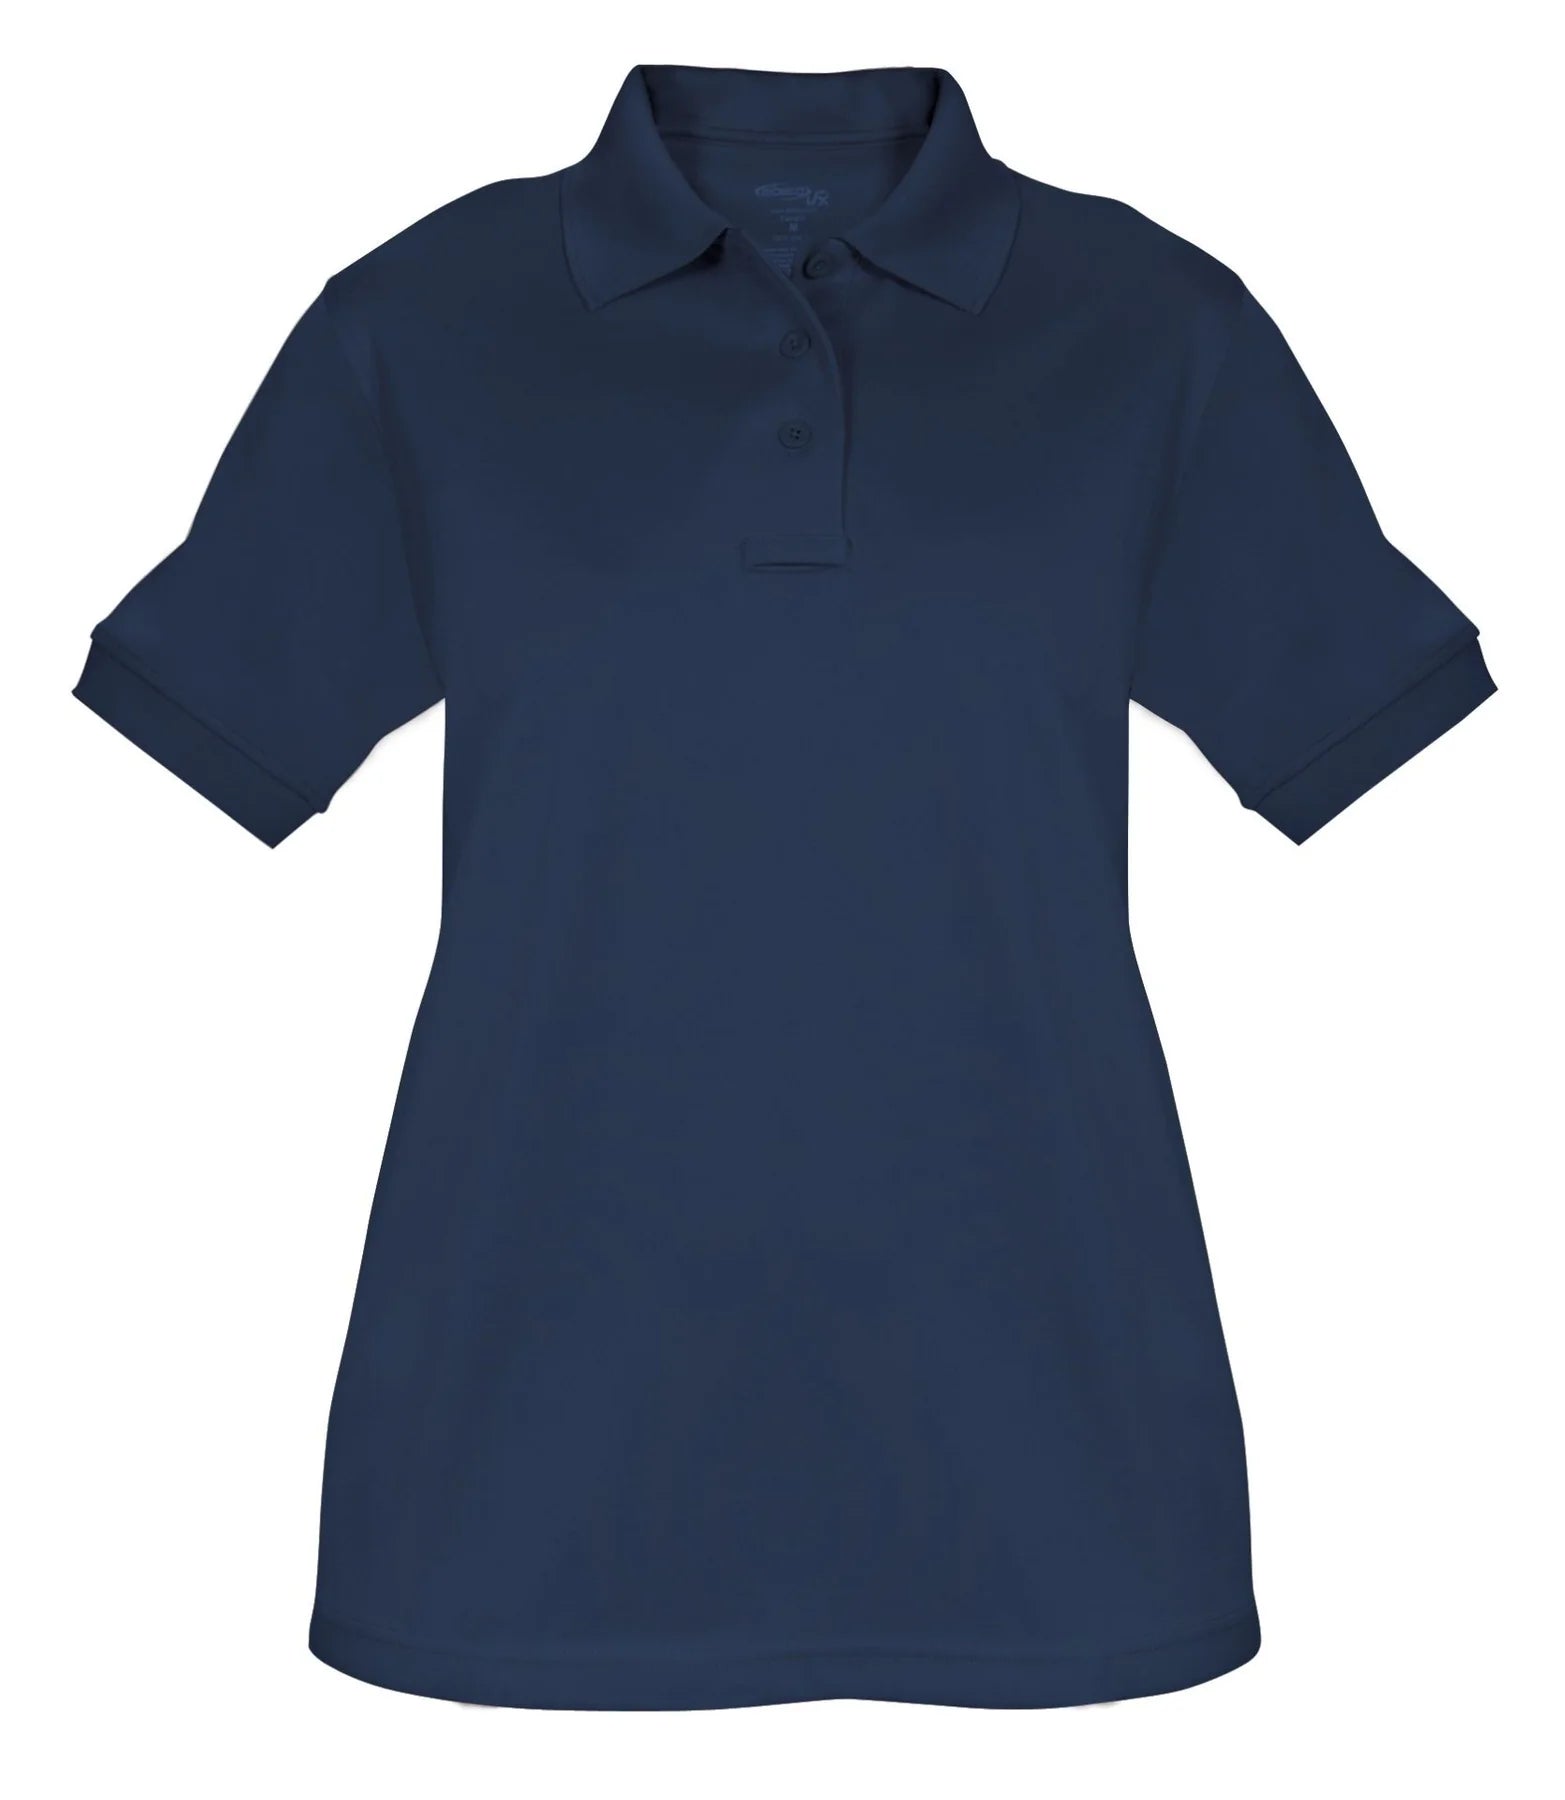 Groveport PD - Ufx™ Women's Short Sleeve Tactical Polo